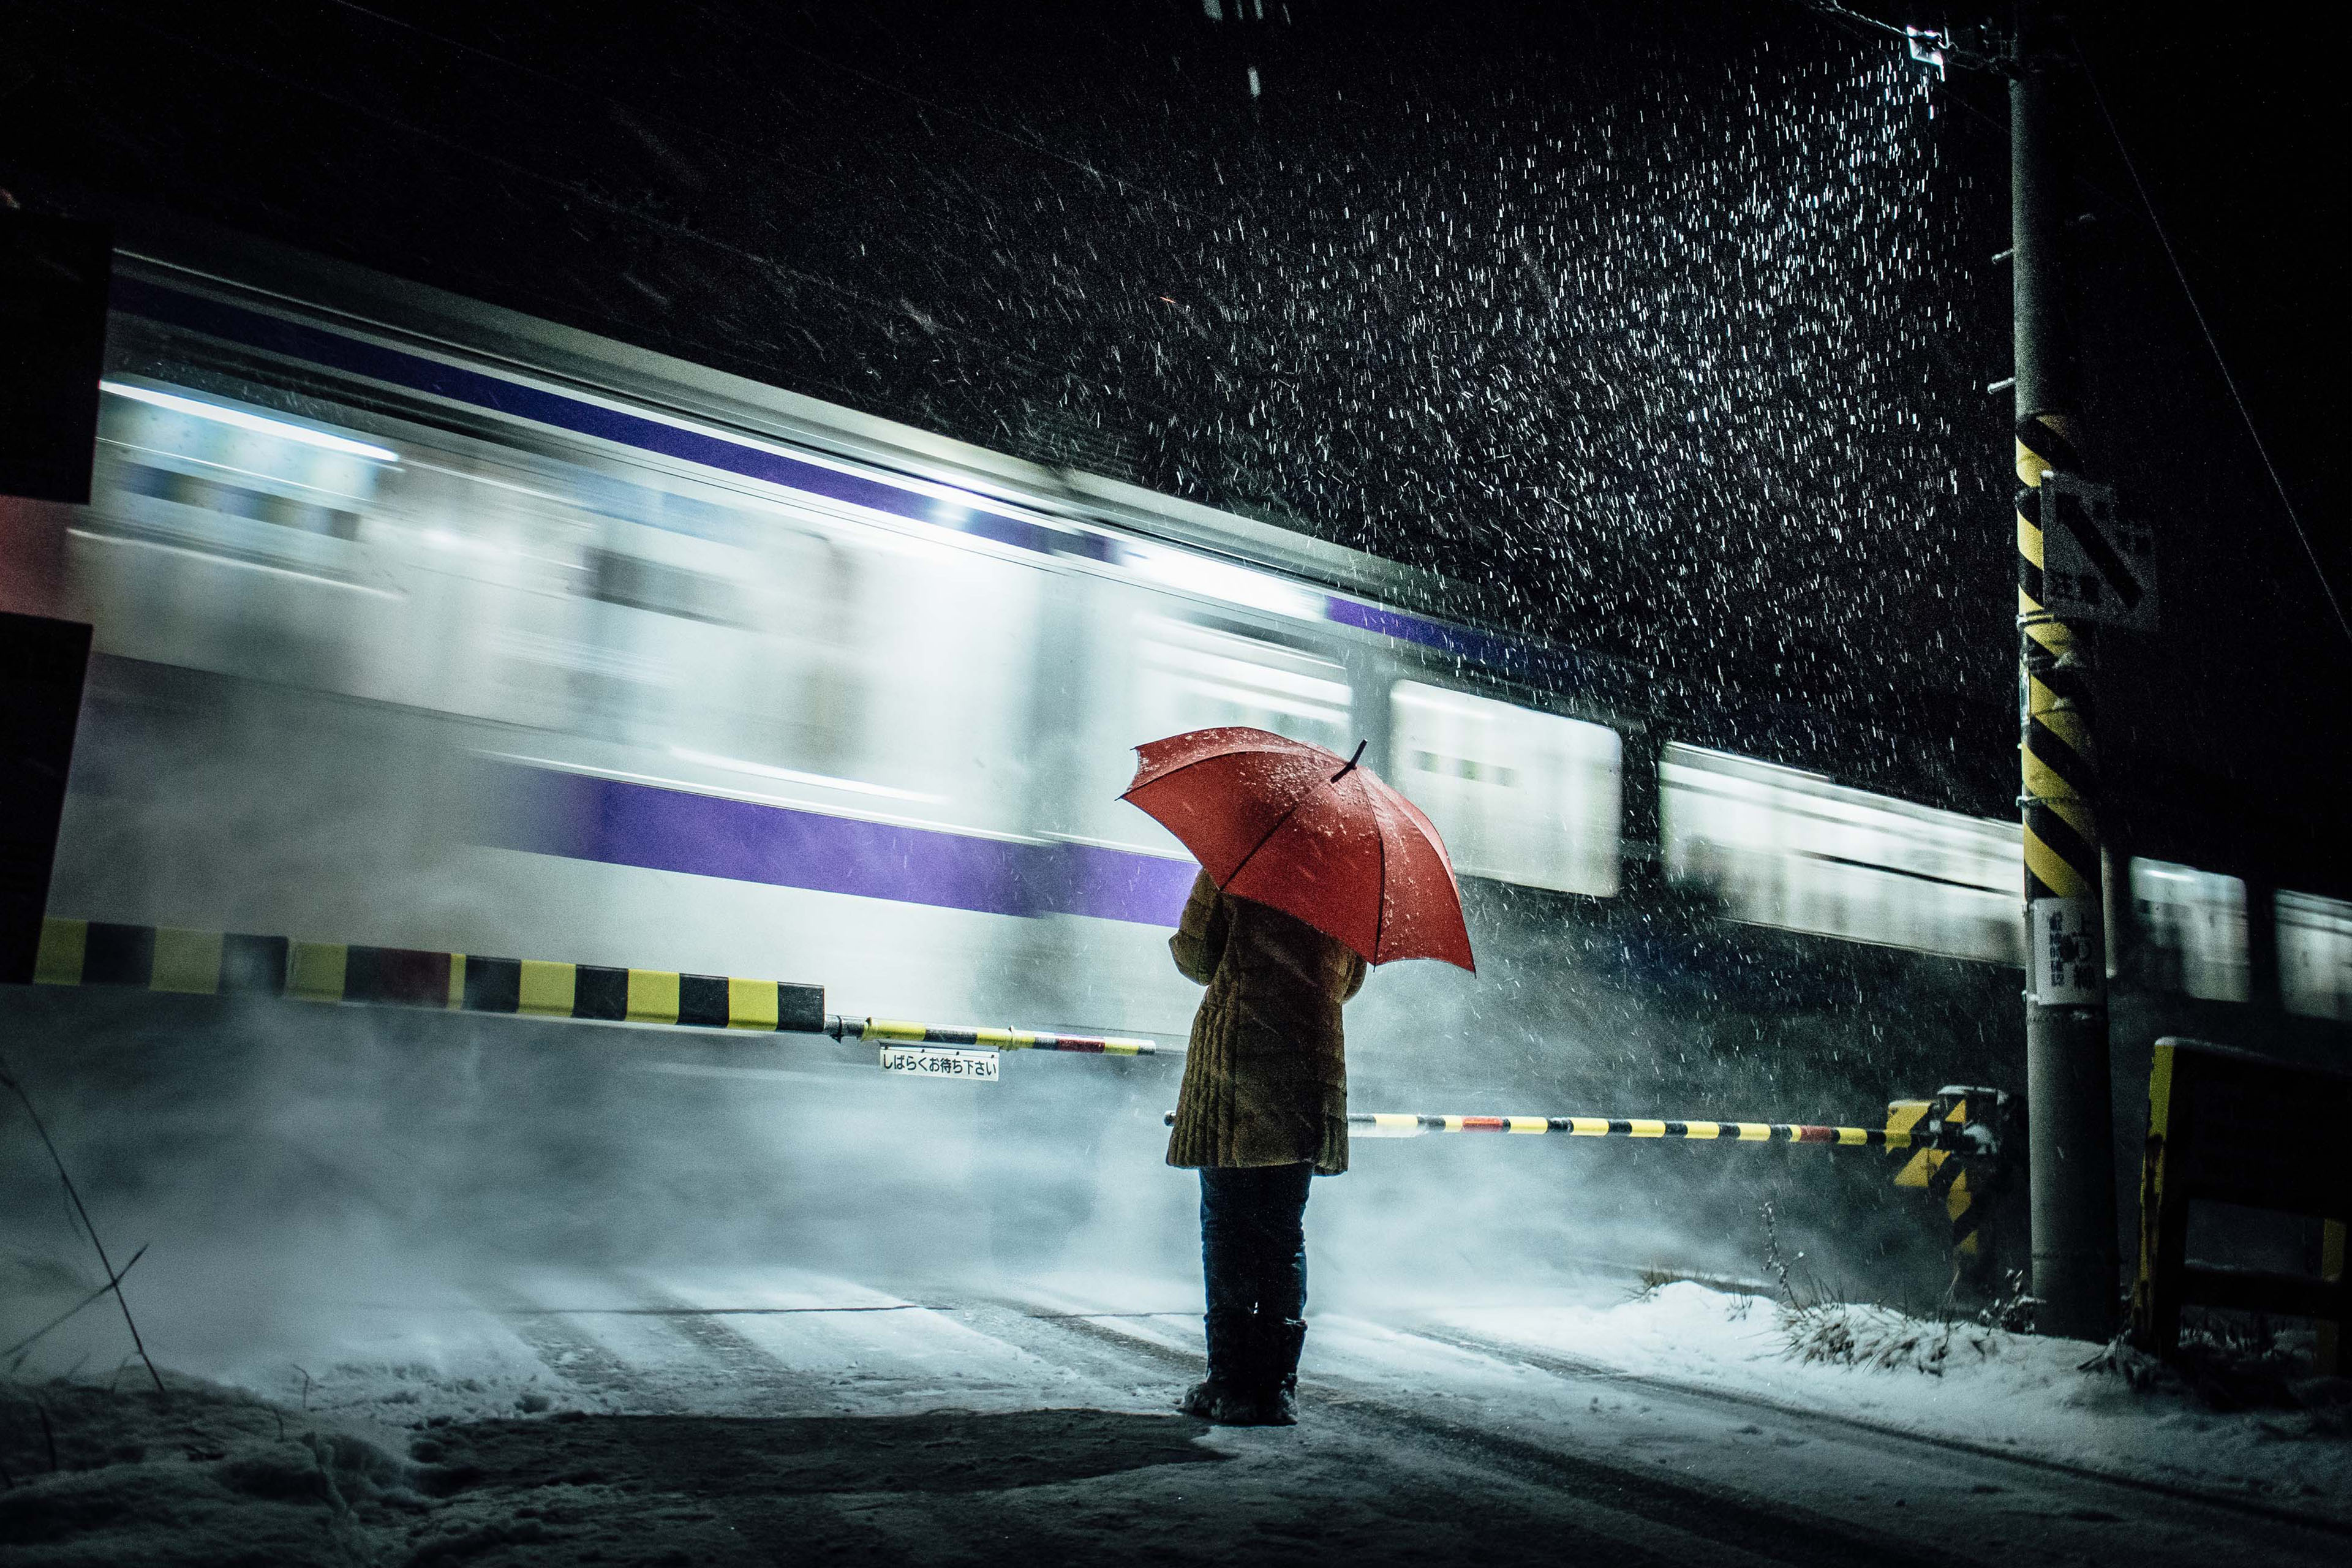 ey-tren-cruzando-por-la-nieve